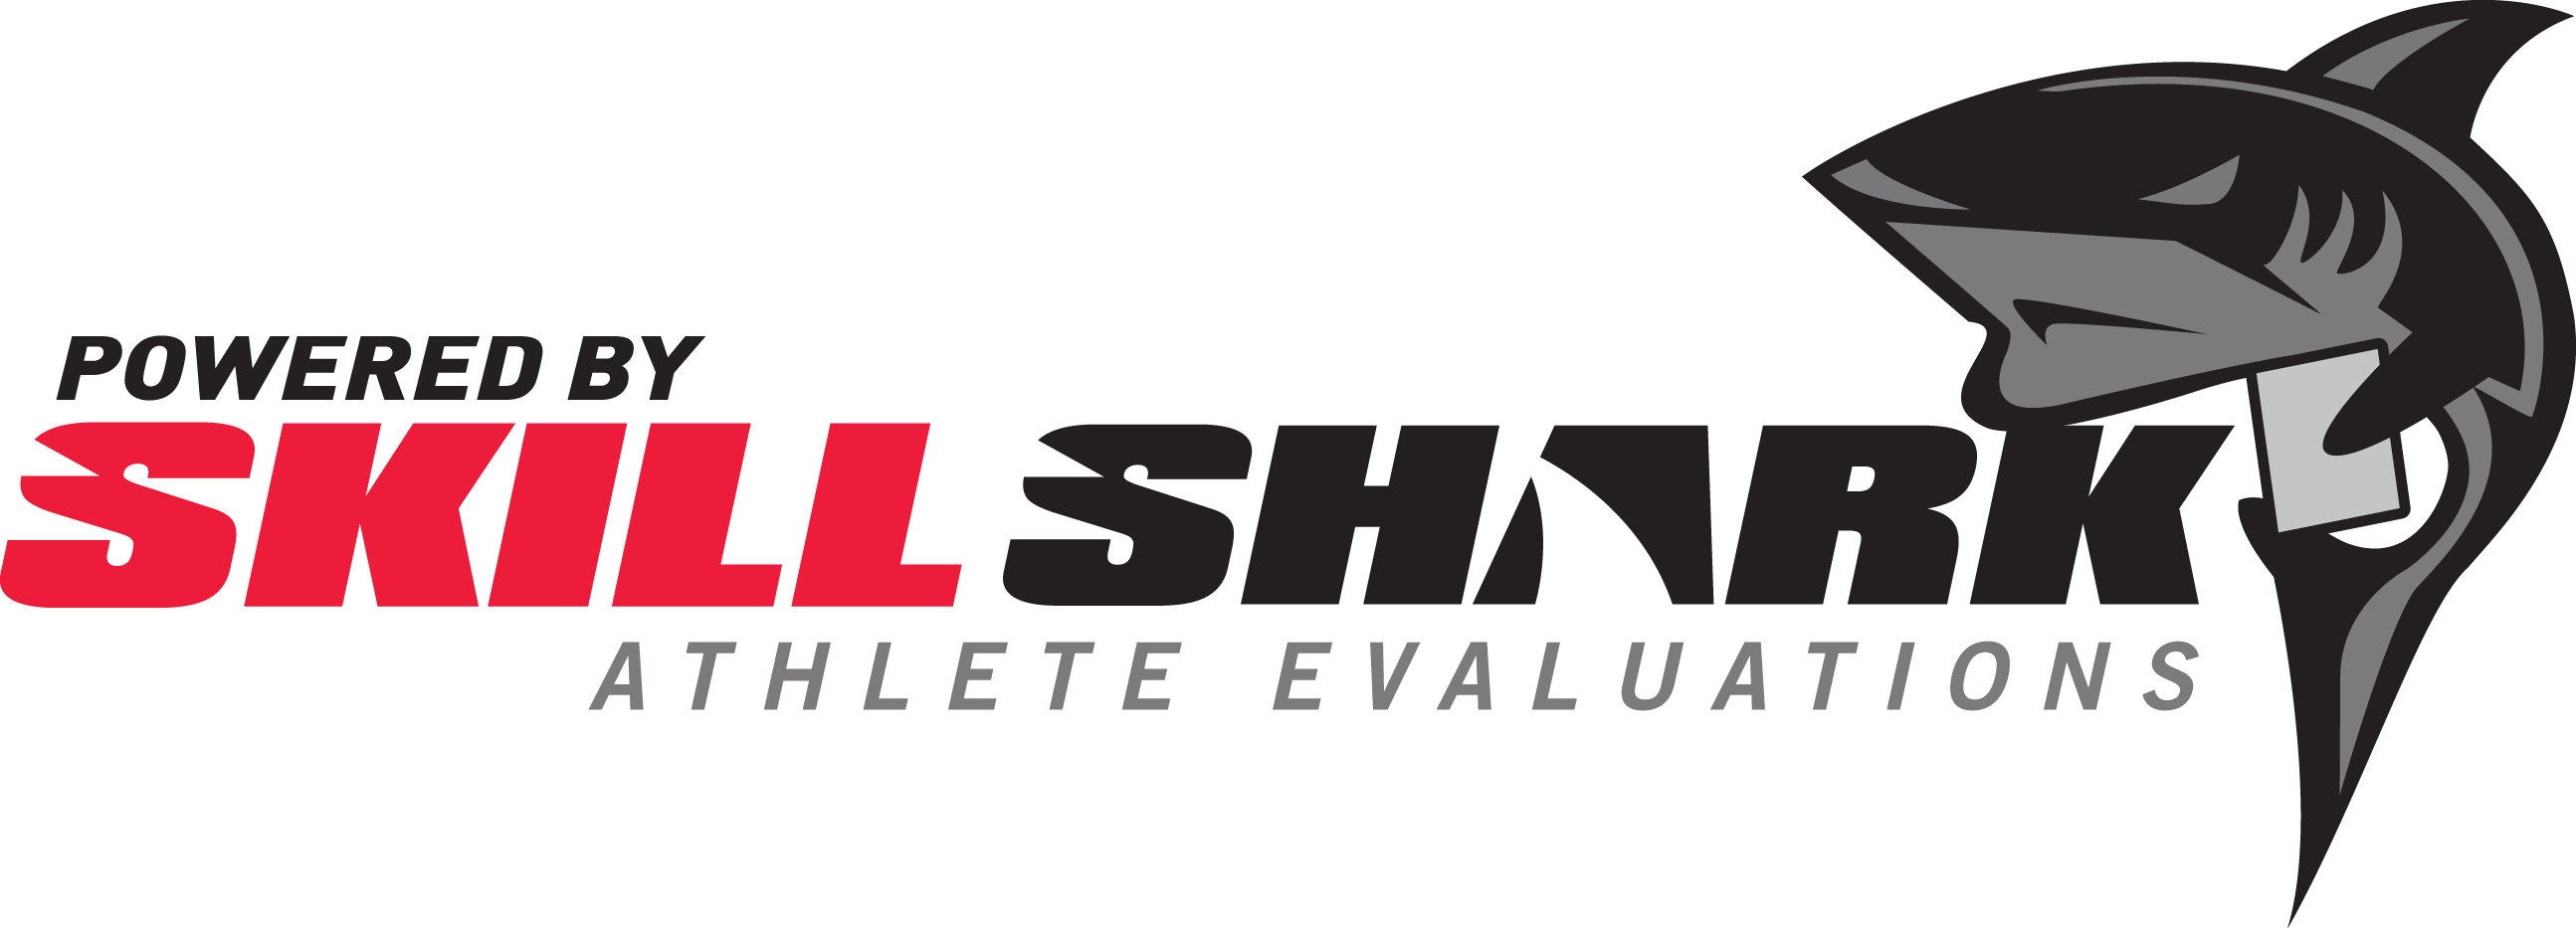 Powered By- Skillshark-Athlete-Evaluation-Shark-Logo-powered-by